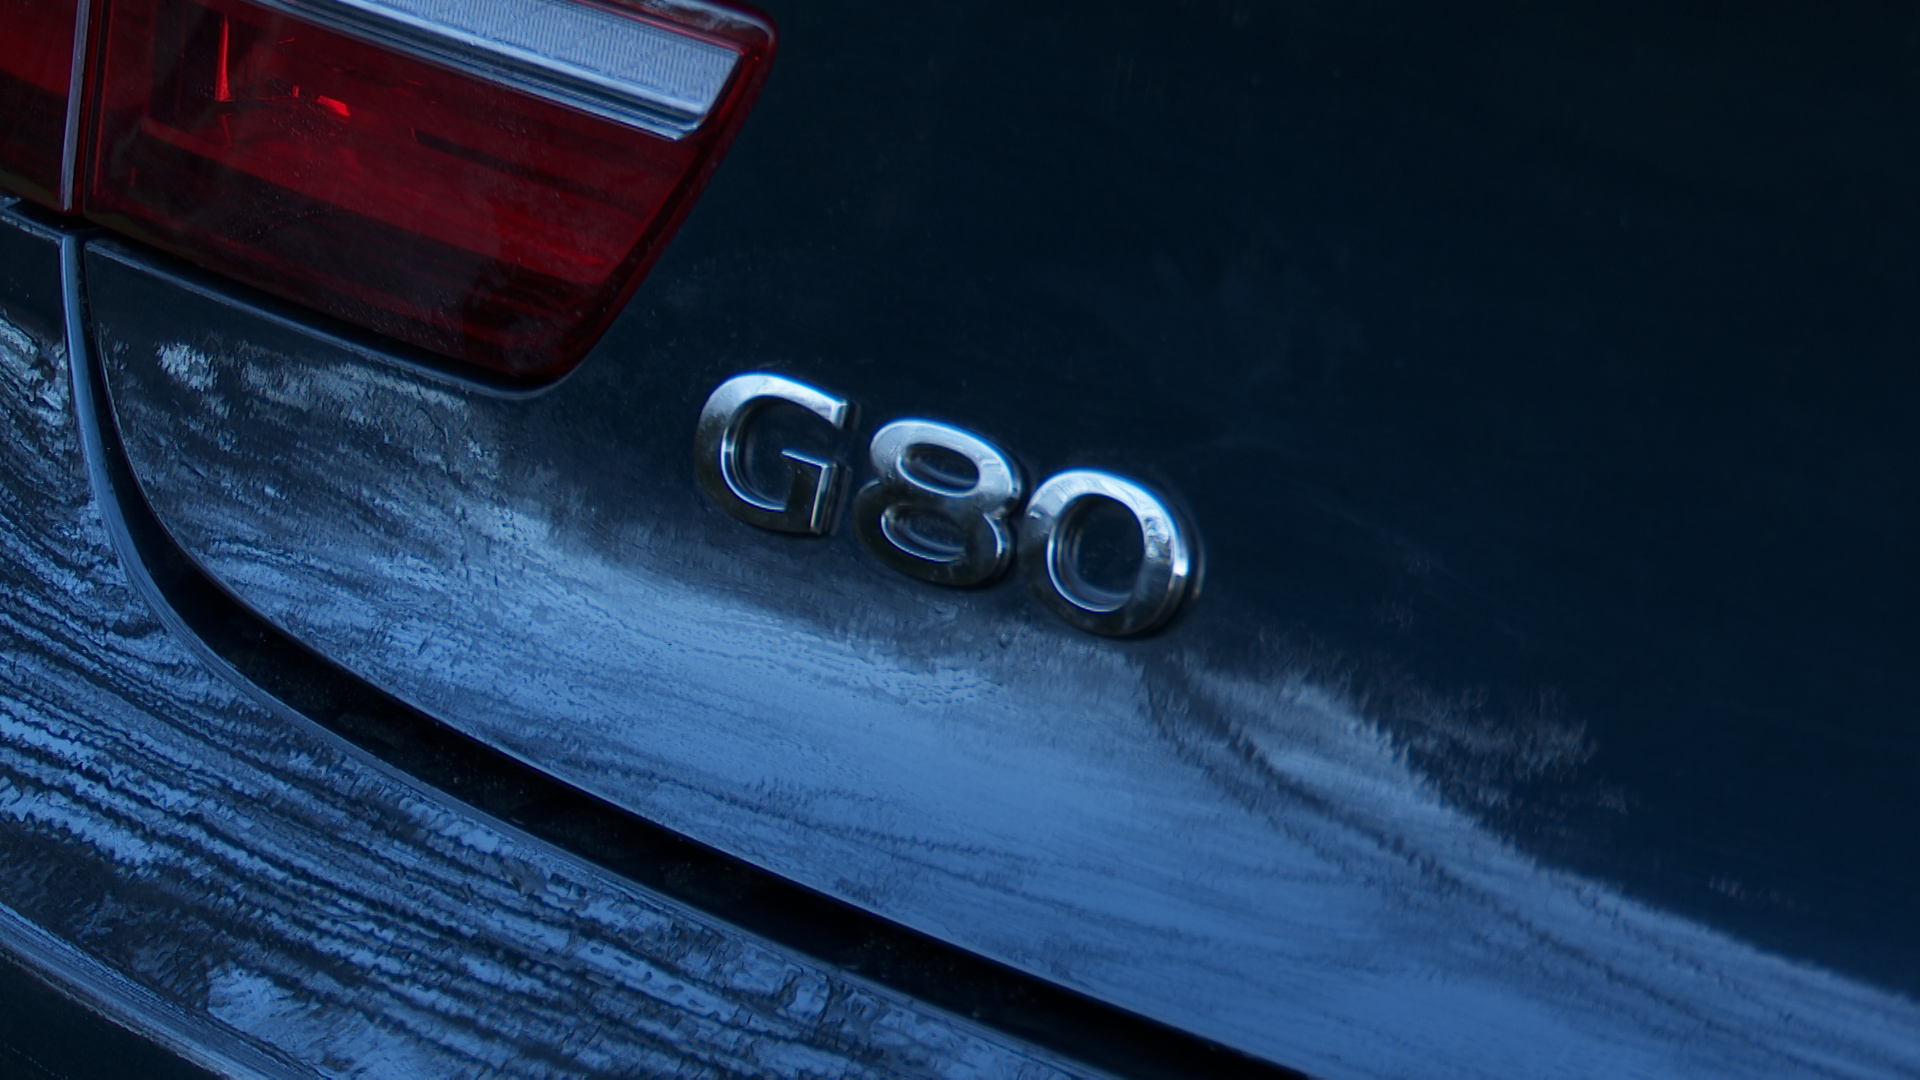 GENESIS G80 SALOON 2.5T Premium Line 4dr Auto RWD